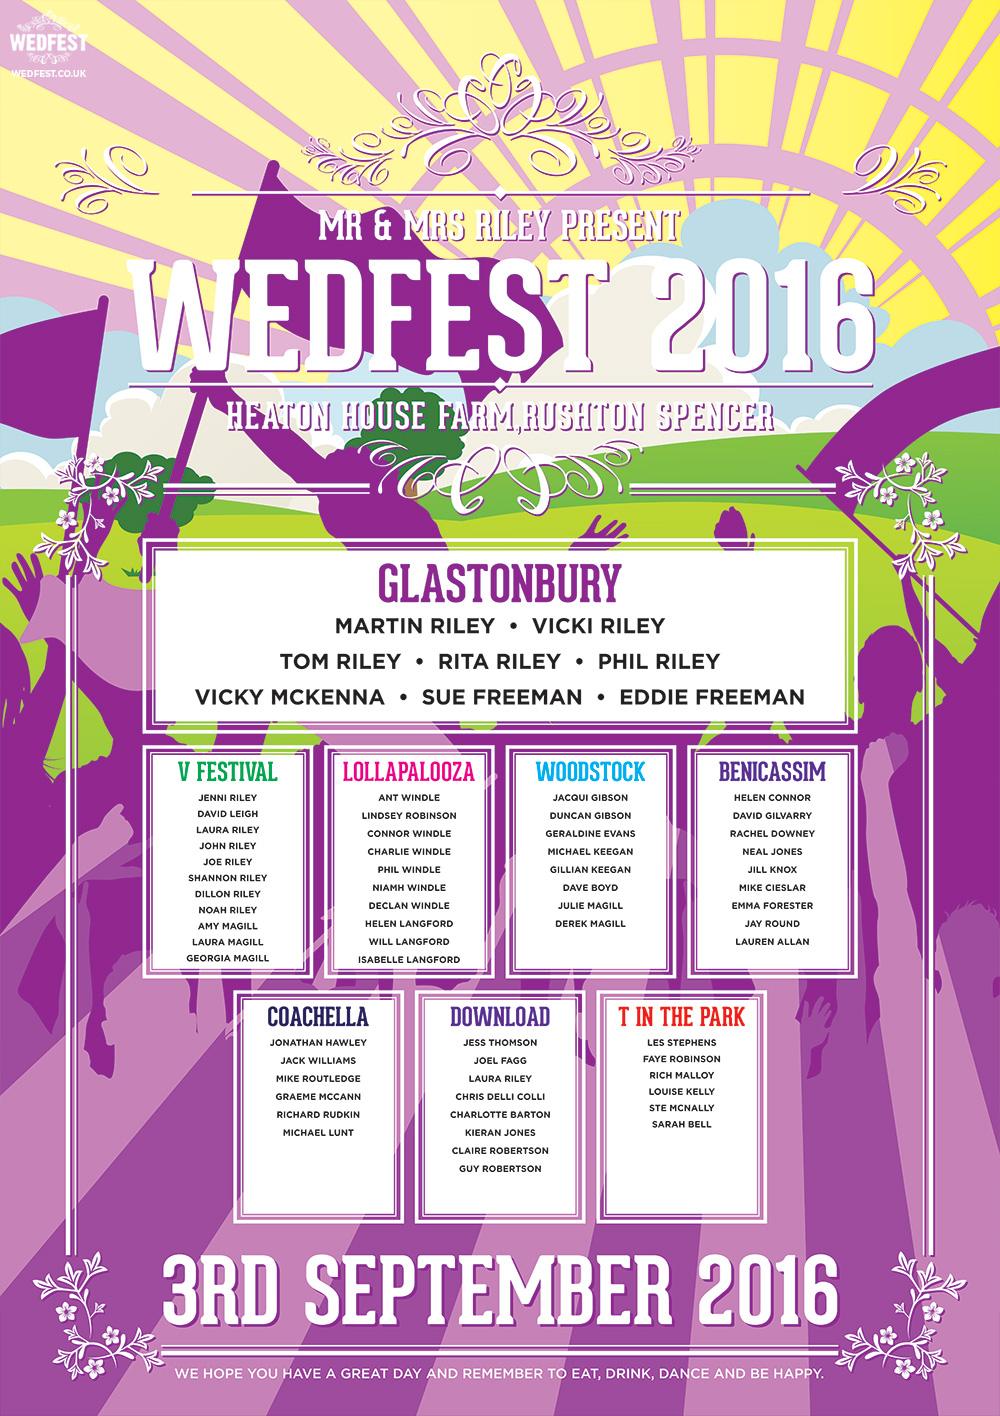 Wedfest Wedding table seating plan Heaton House Farm